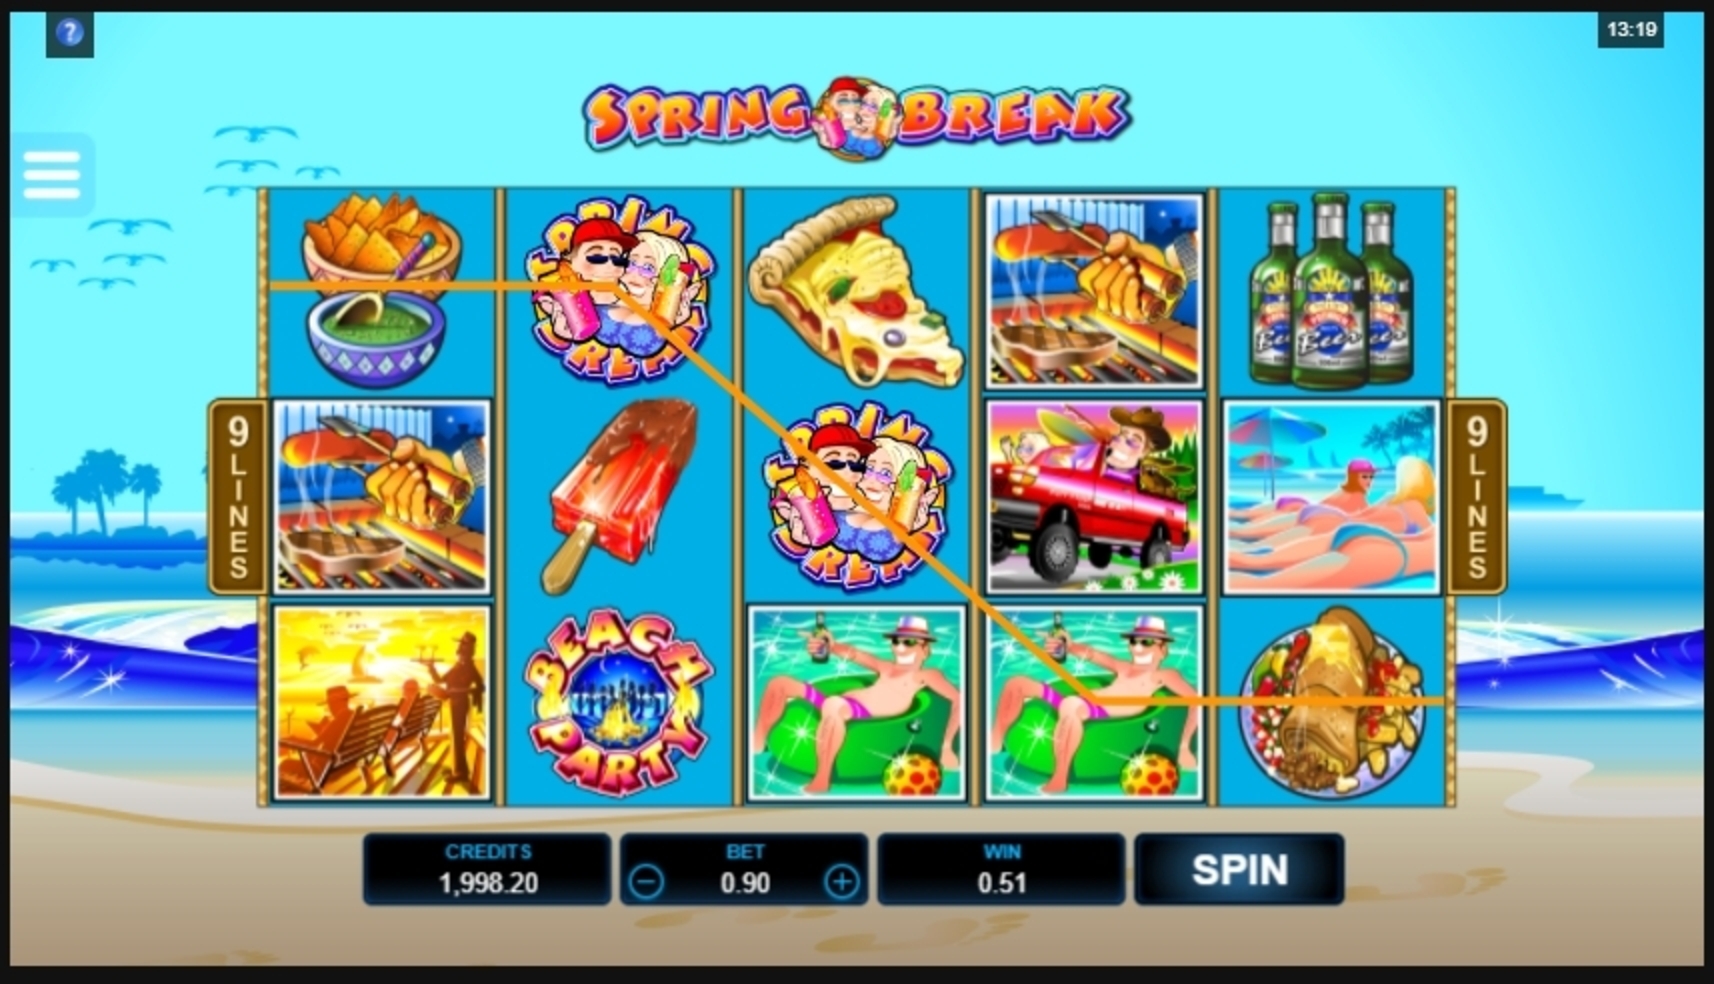 Win Money in Spring Break Free Slot Game by Microgaming